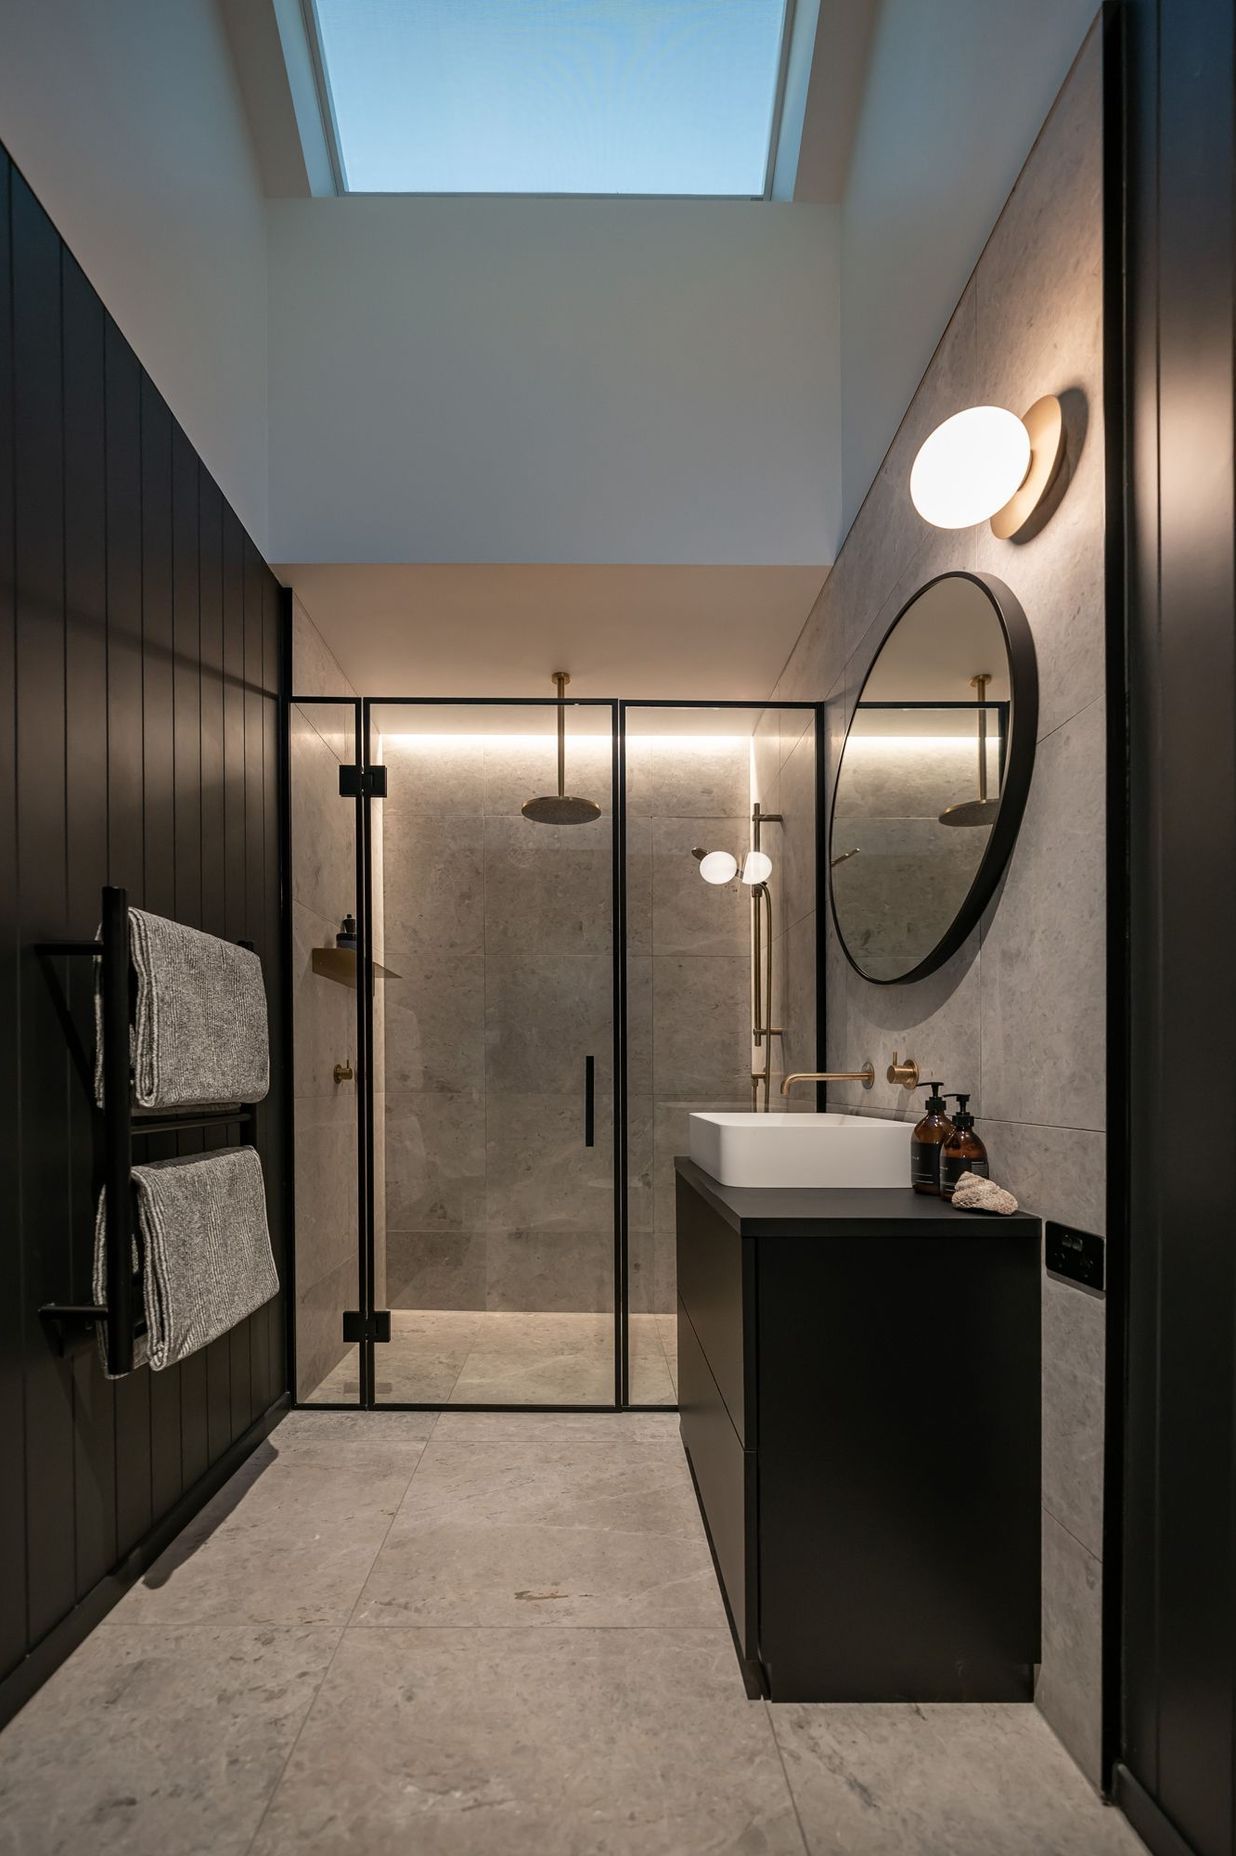 The master bathroom creates a mood through dark colours and luxury tiling.